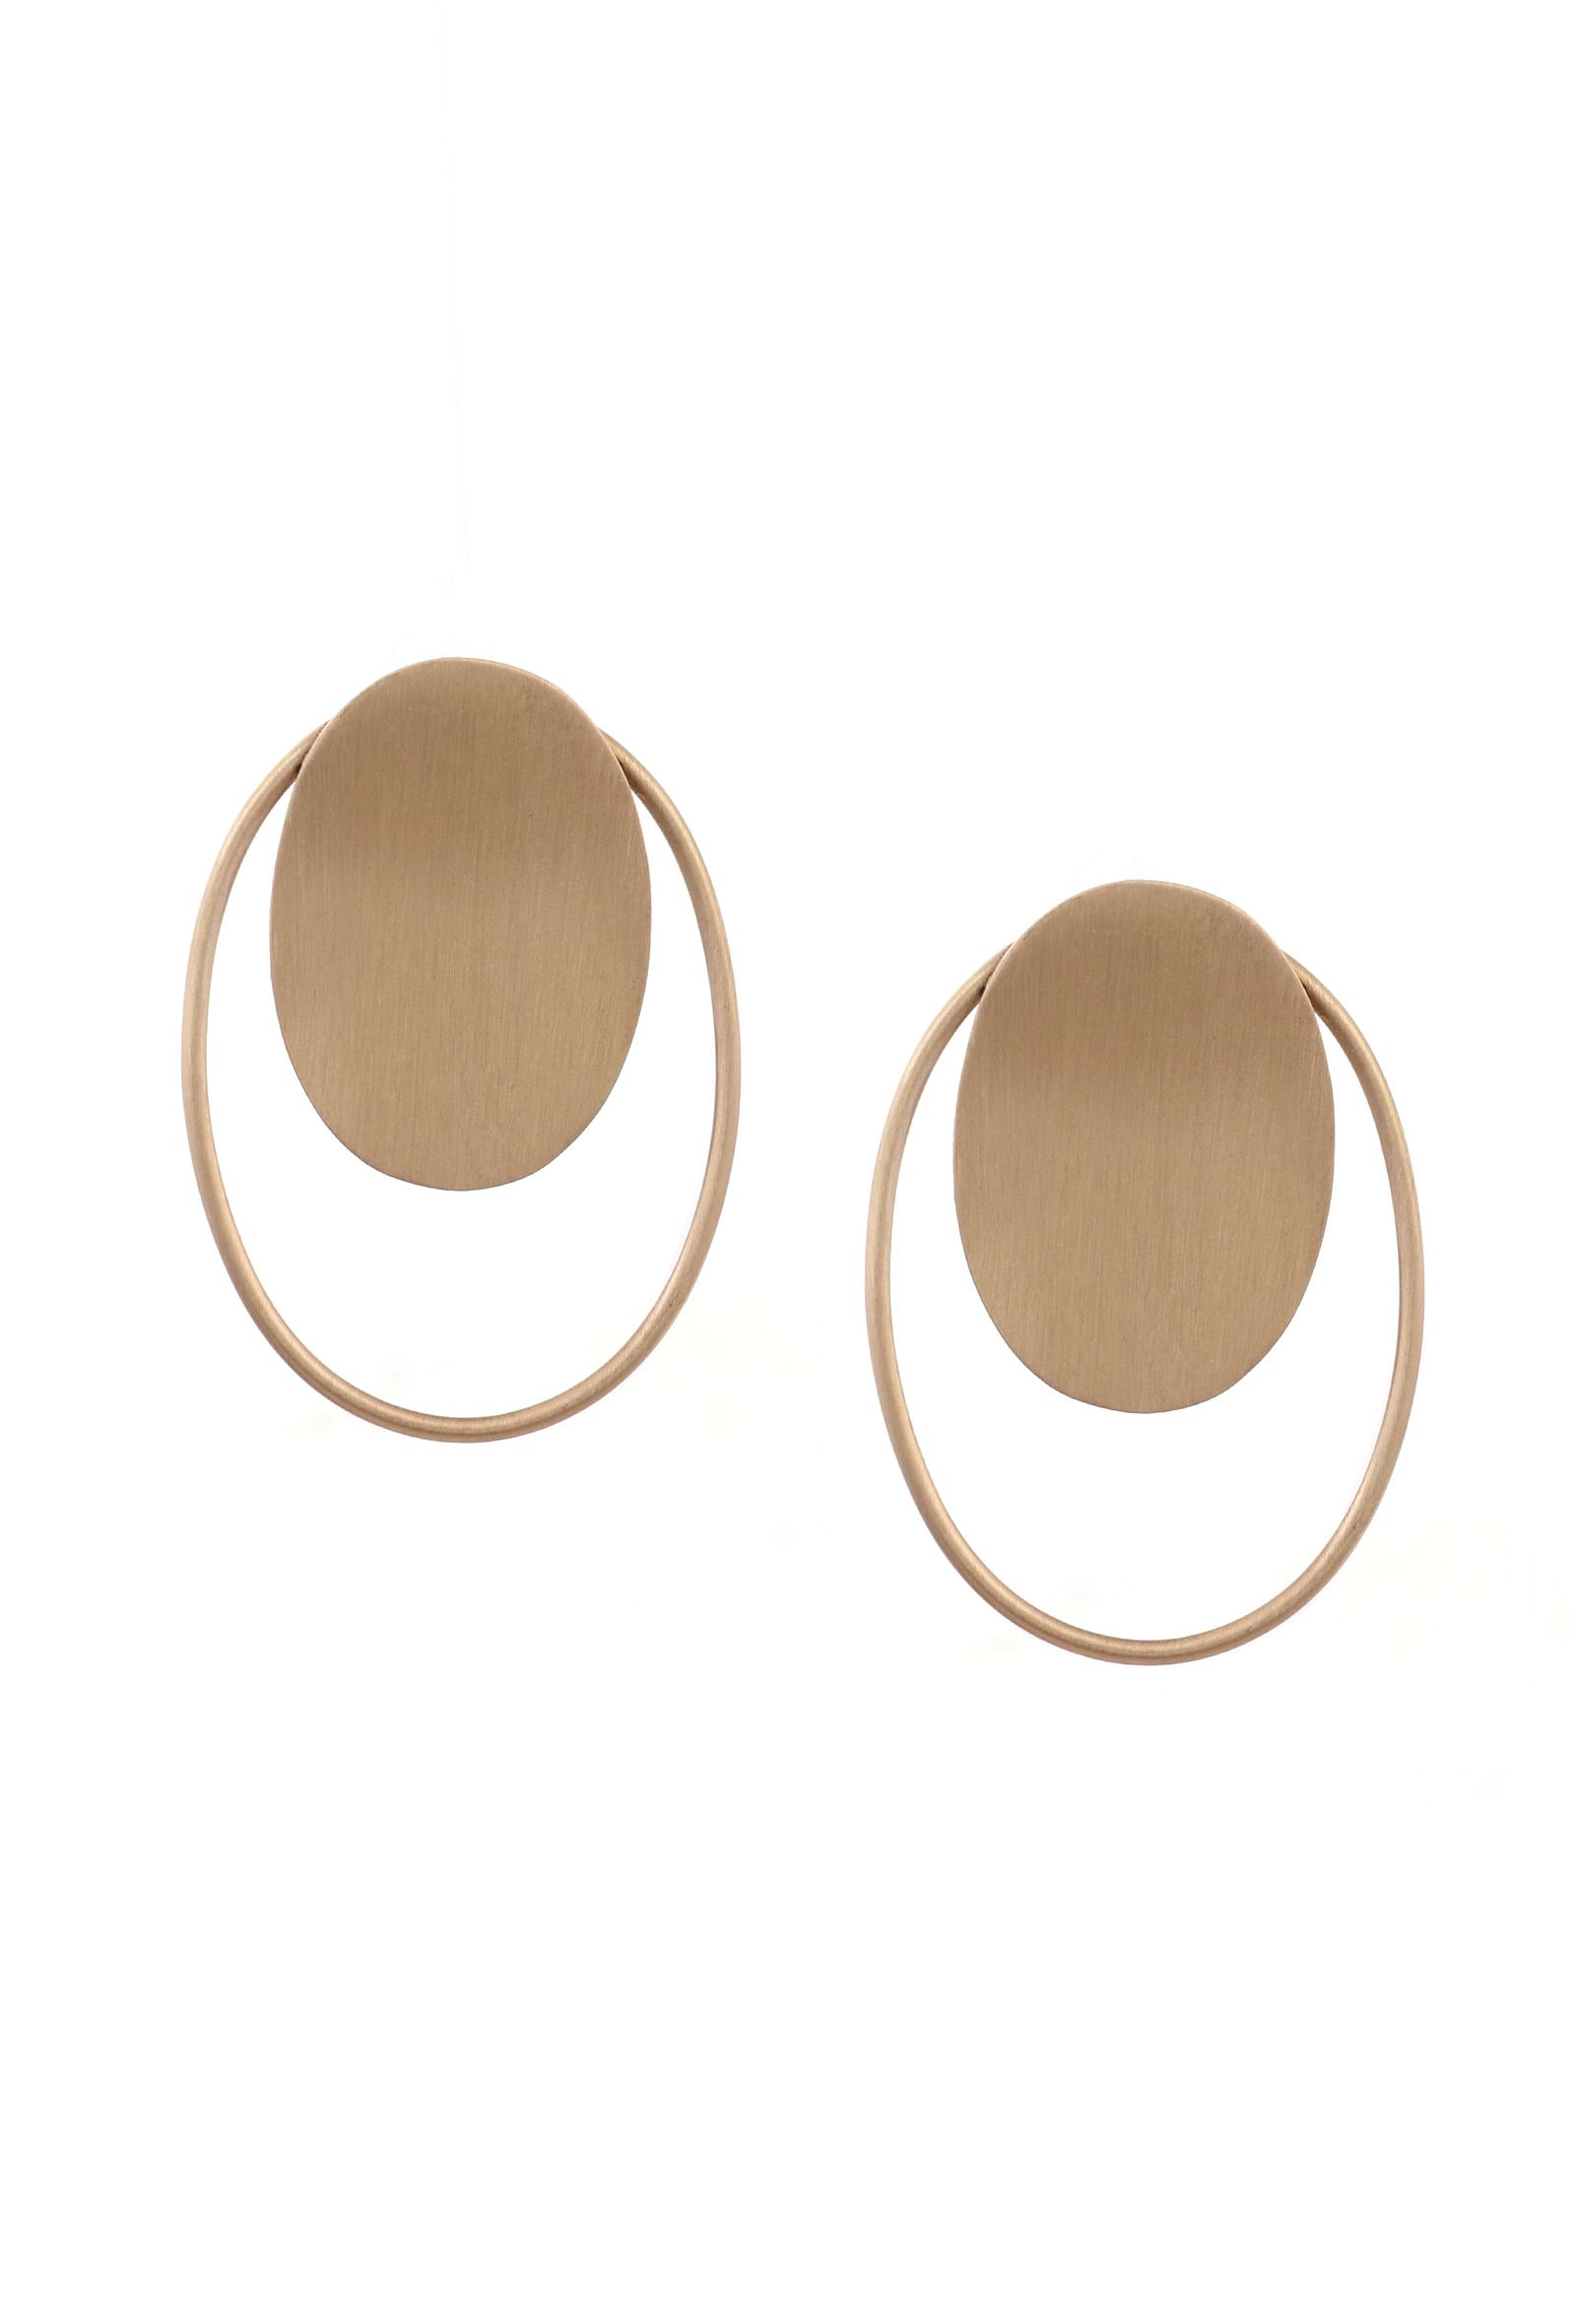 Double Layered Brass Earrings